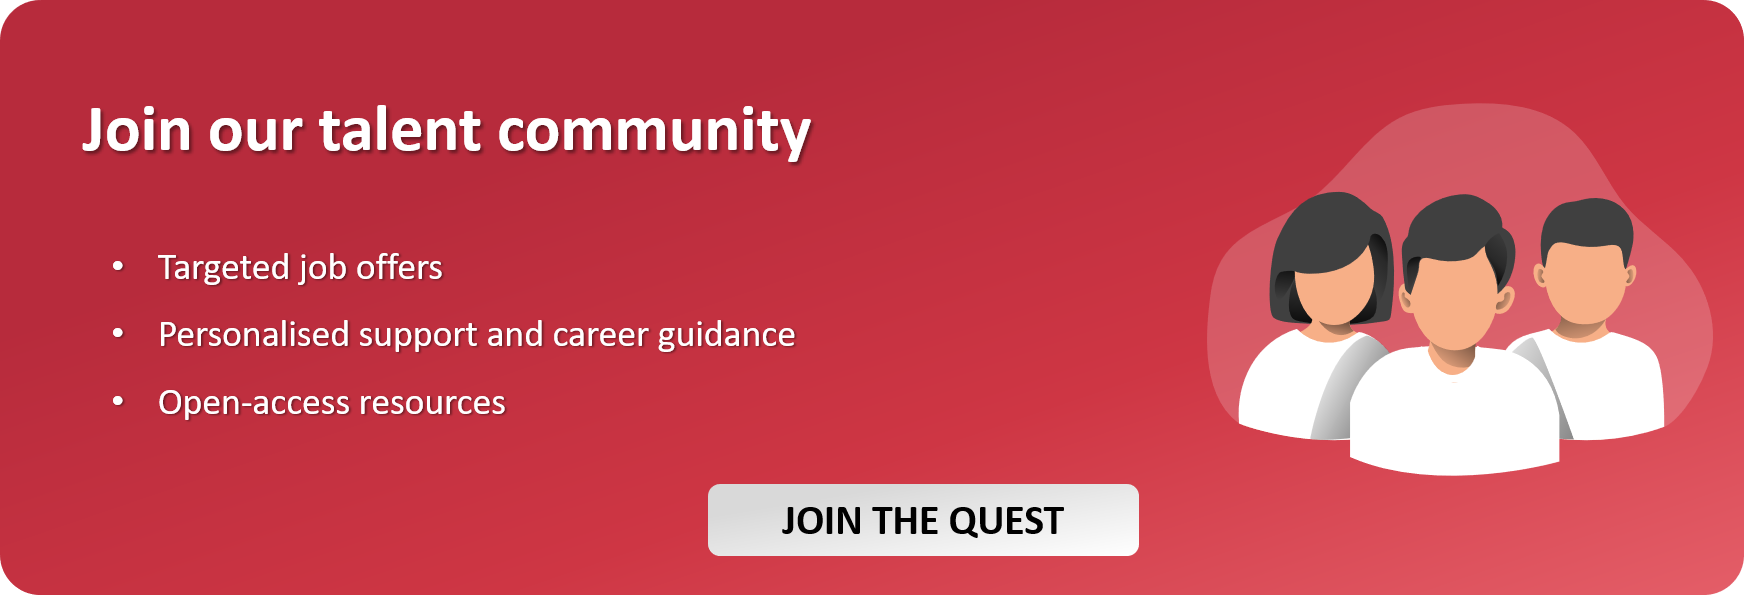 Join our talent community - Mindquest